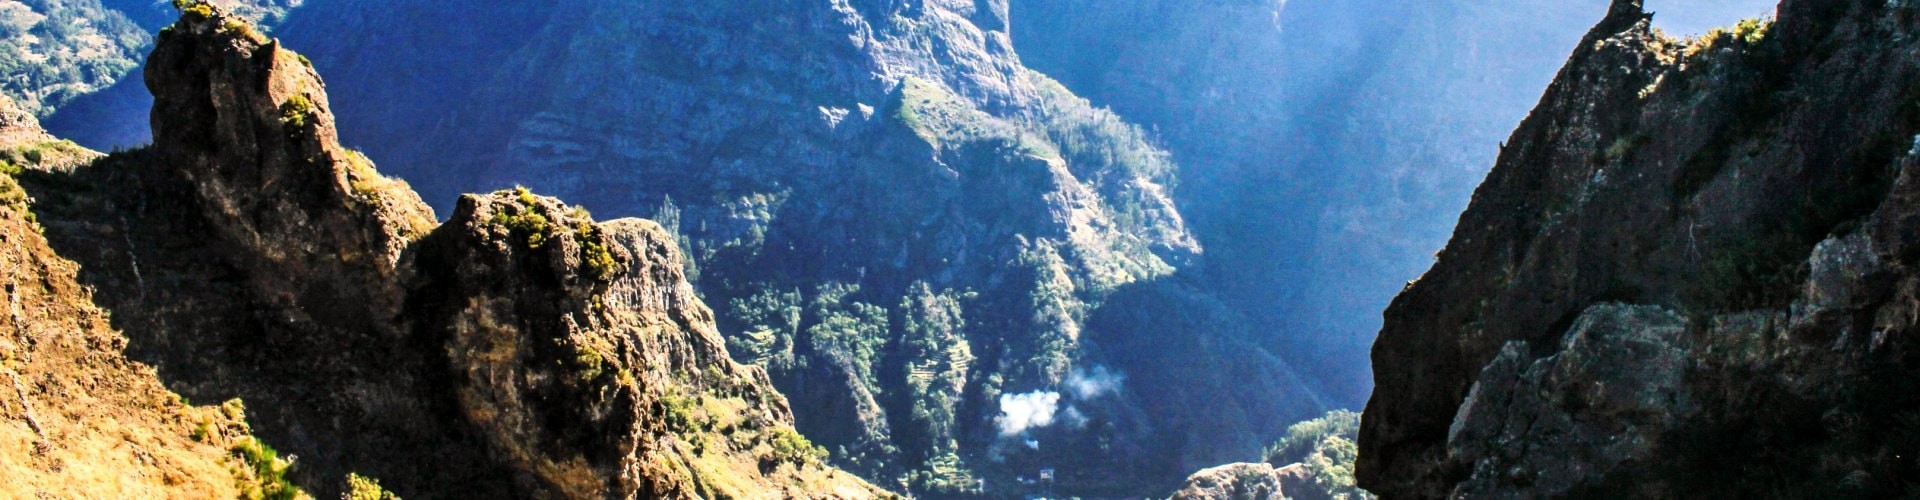 Curral Das Freiras - Madeira Trail Tours (hard)